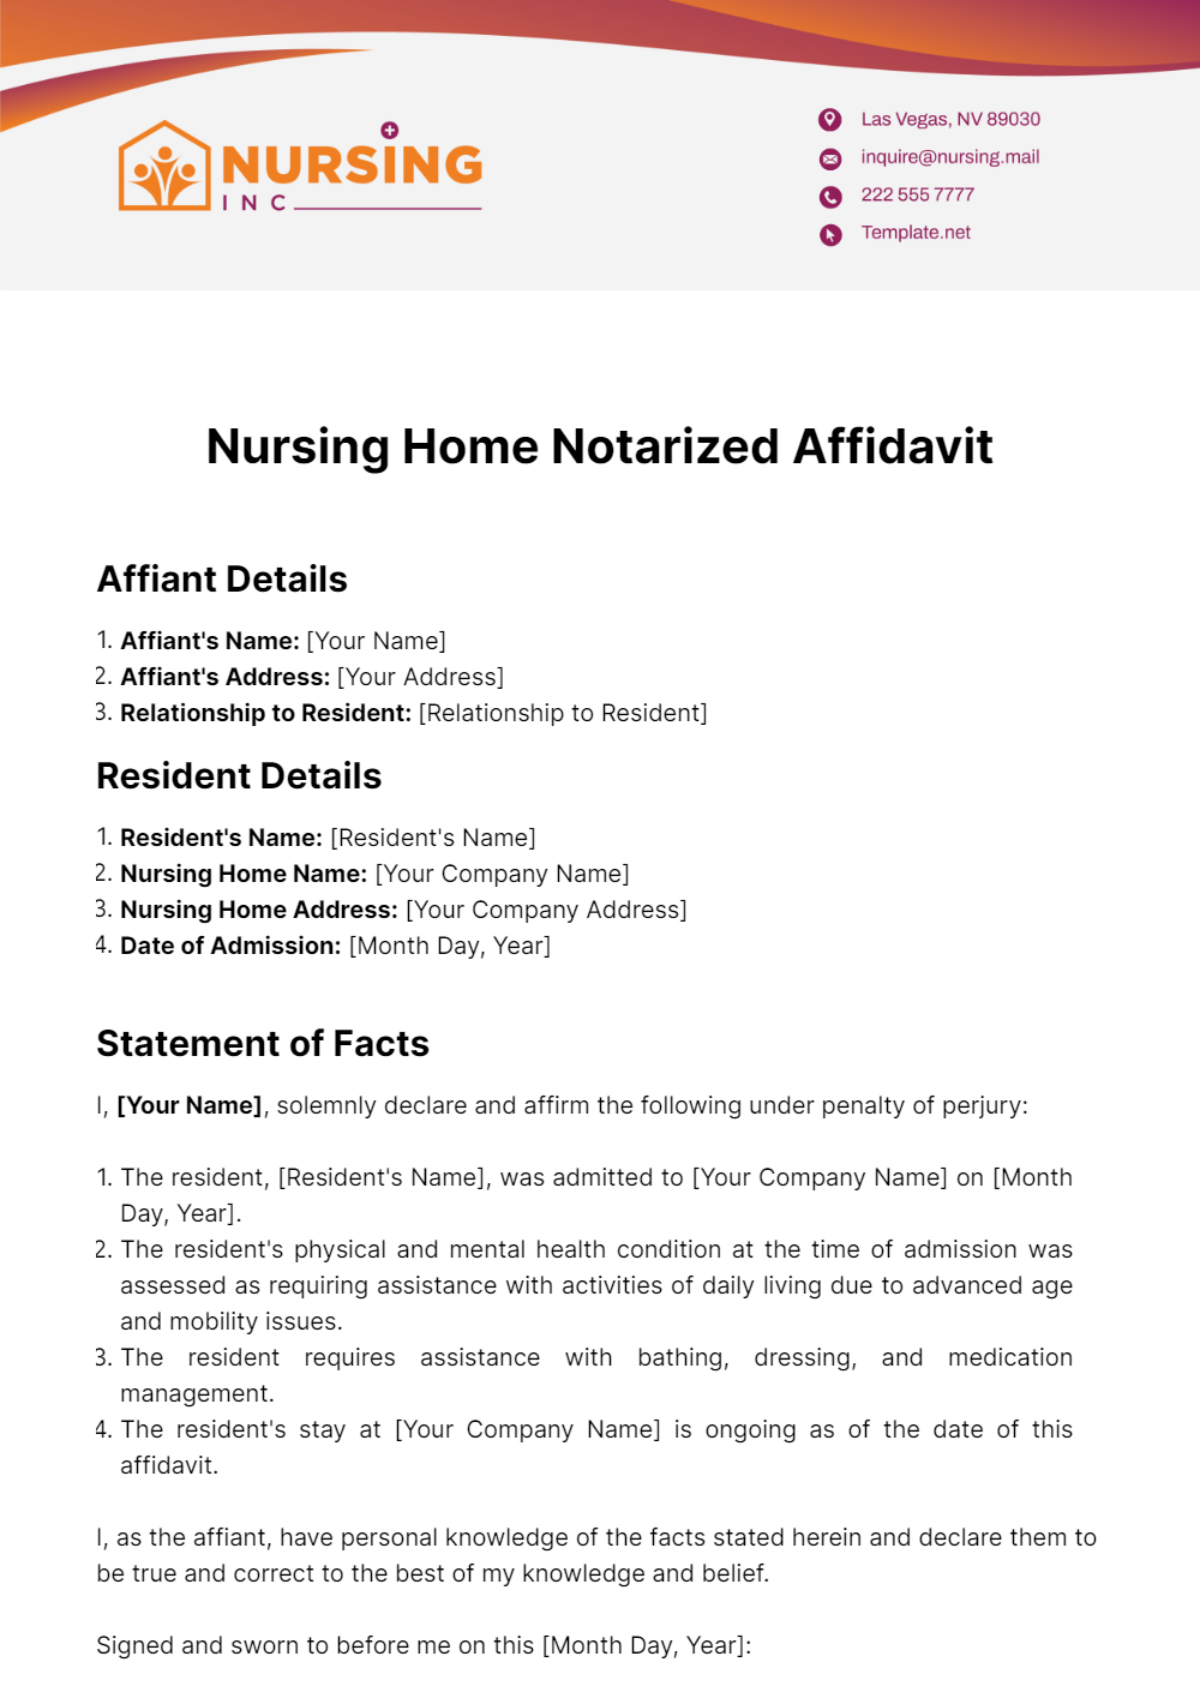 Nursing Home Notarized Affidavit Template